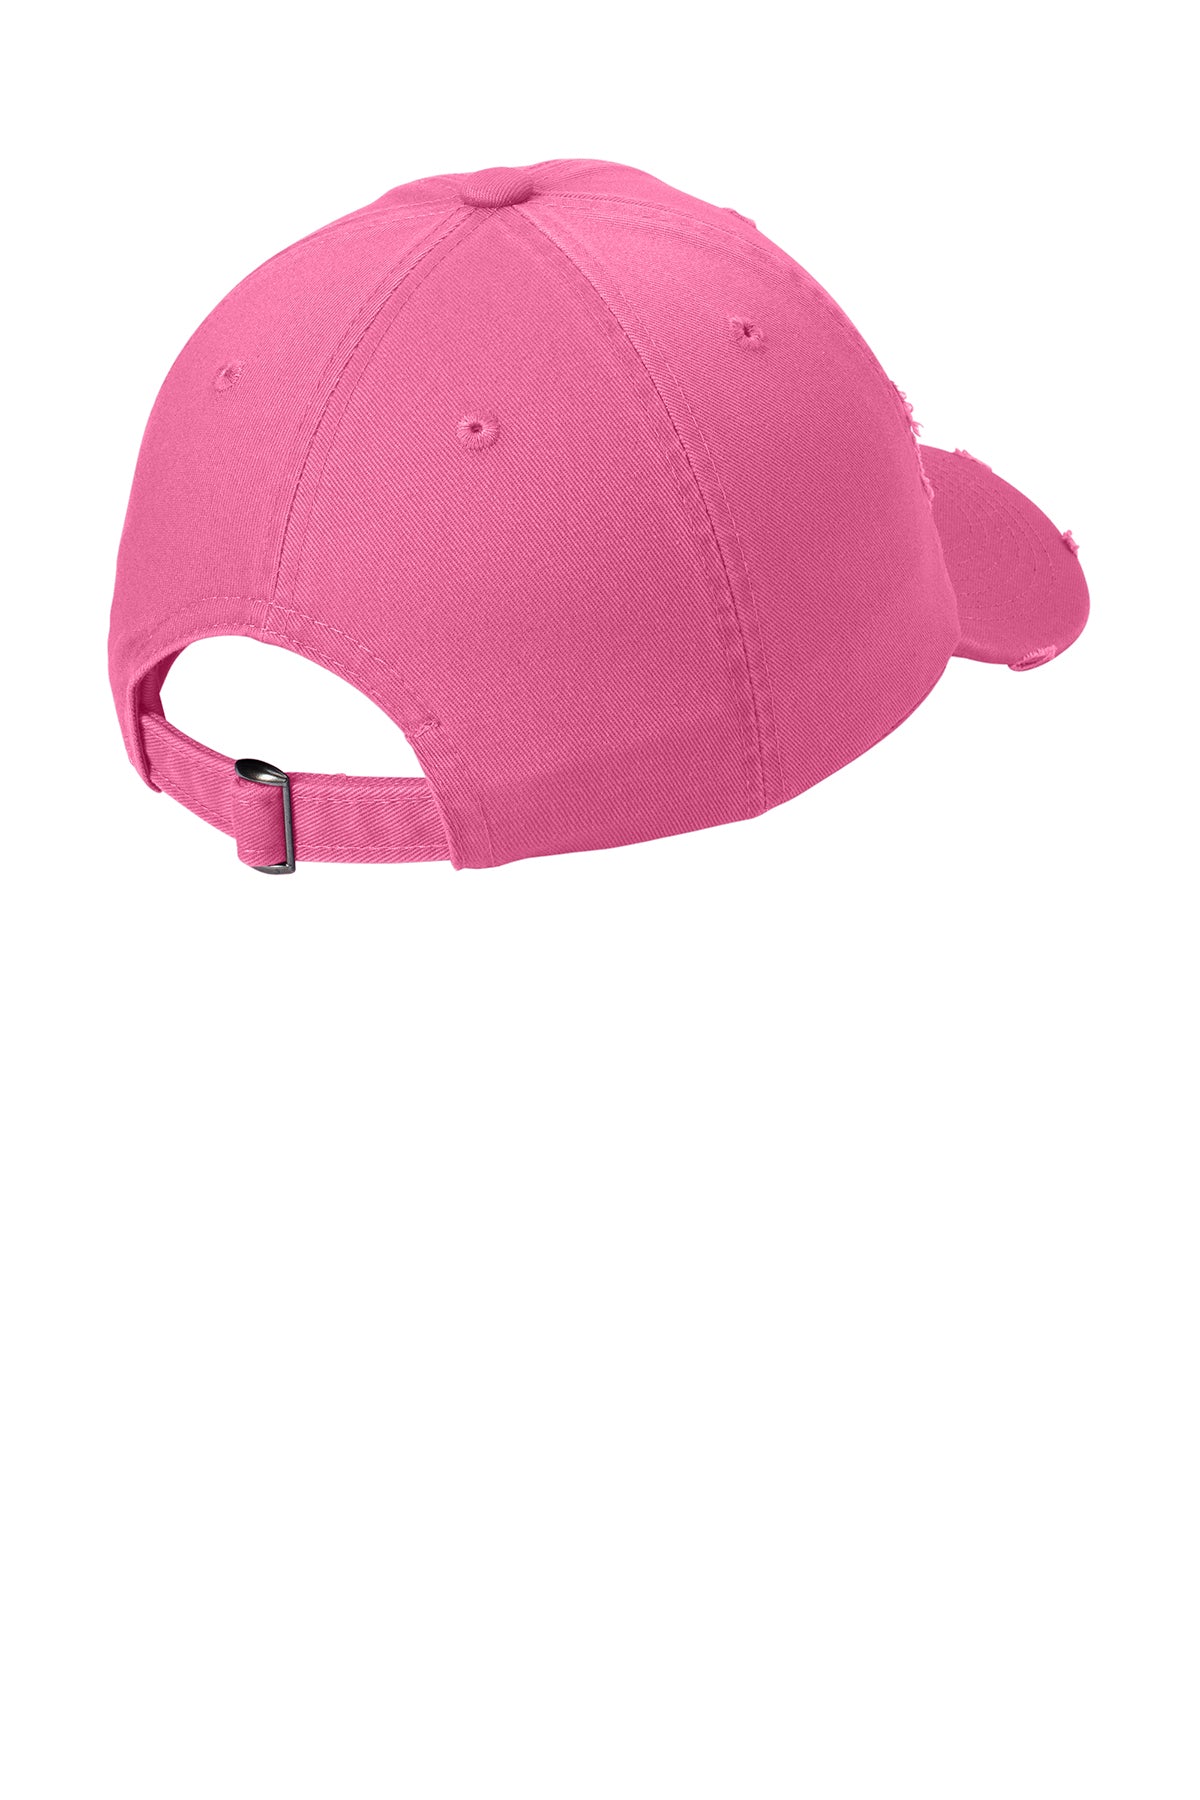 District Distressed Caps, True Pink